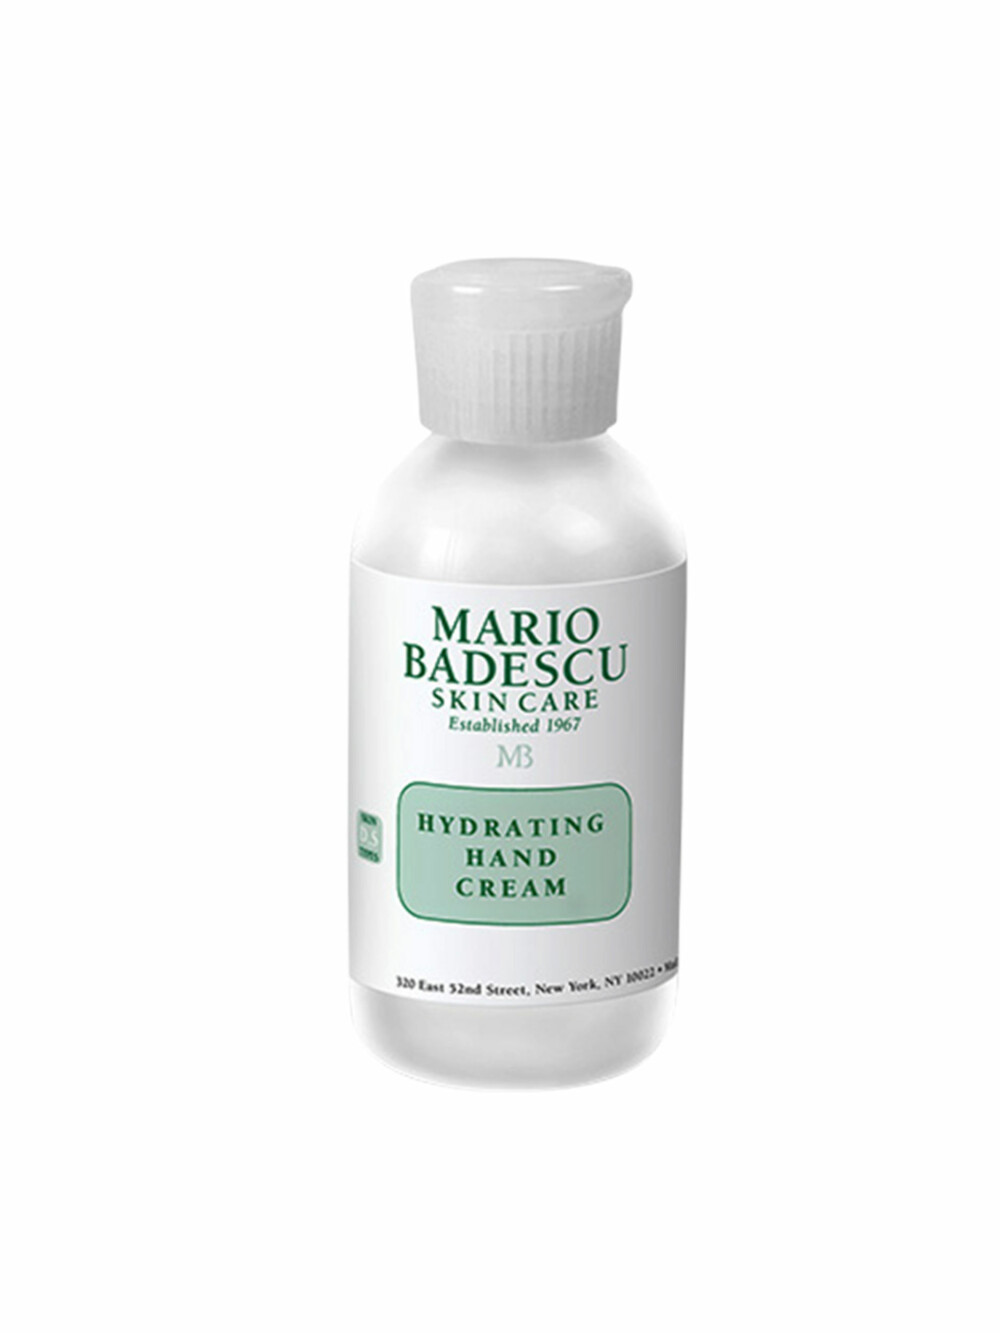 FØR SENGETID: Mario Badescu Hydrating Hand Cream, 118 ml, kr 180.